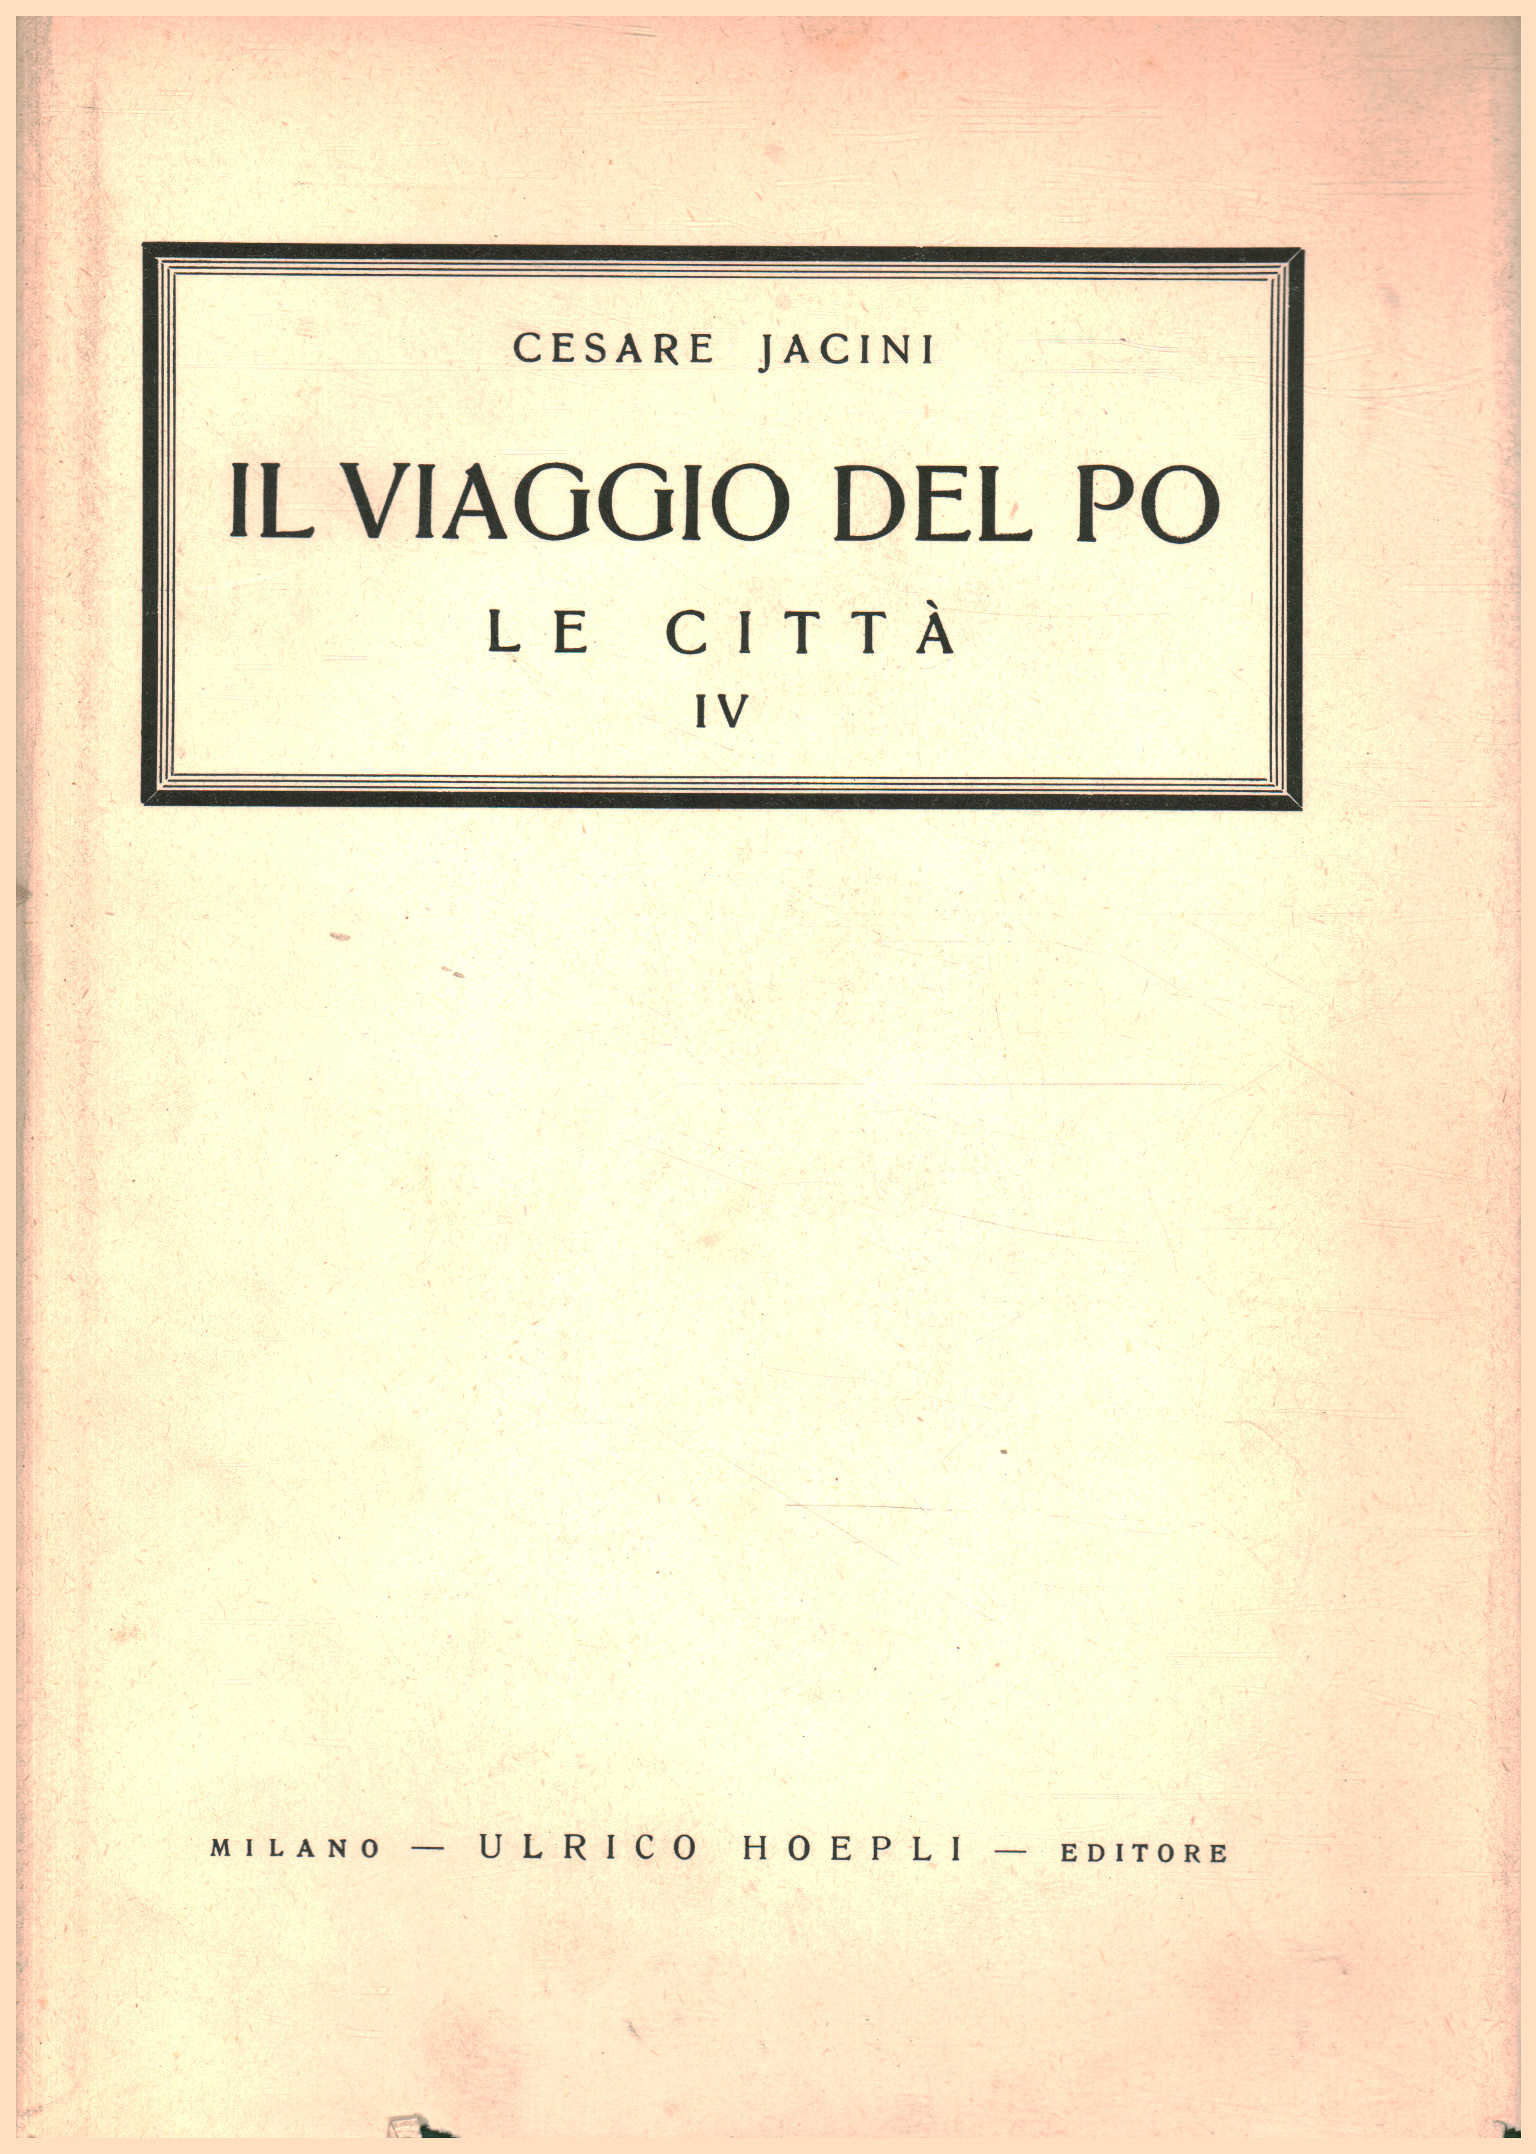 Die Reise des Po. Vol. VII. Die Städte. Teil IV. V, Cesare Jacini